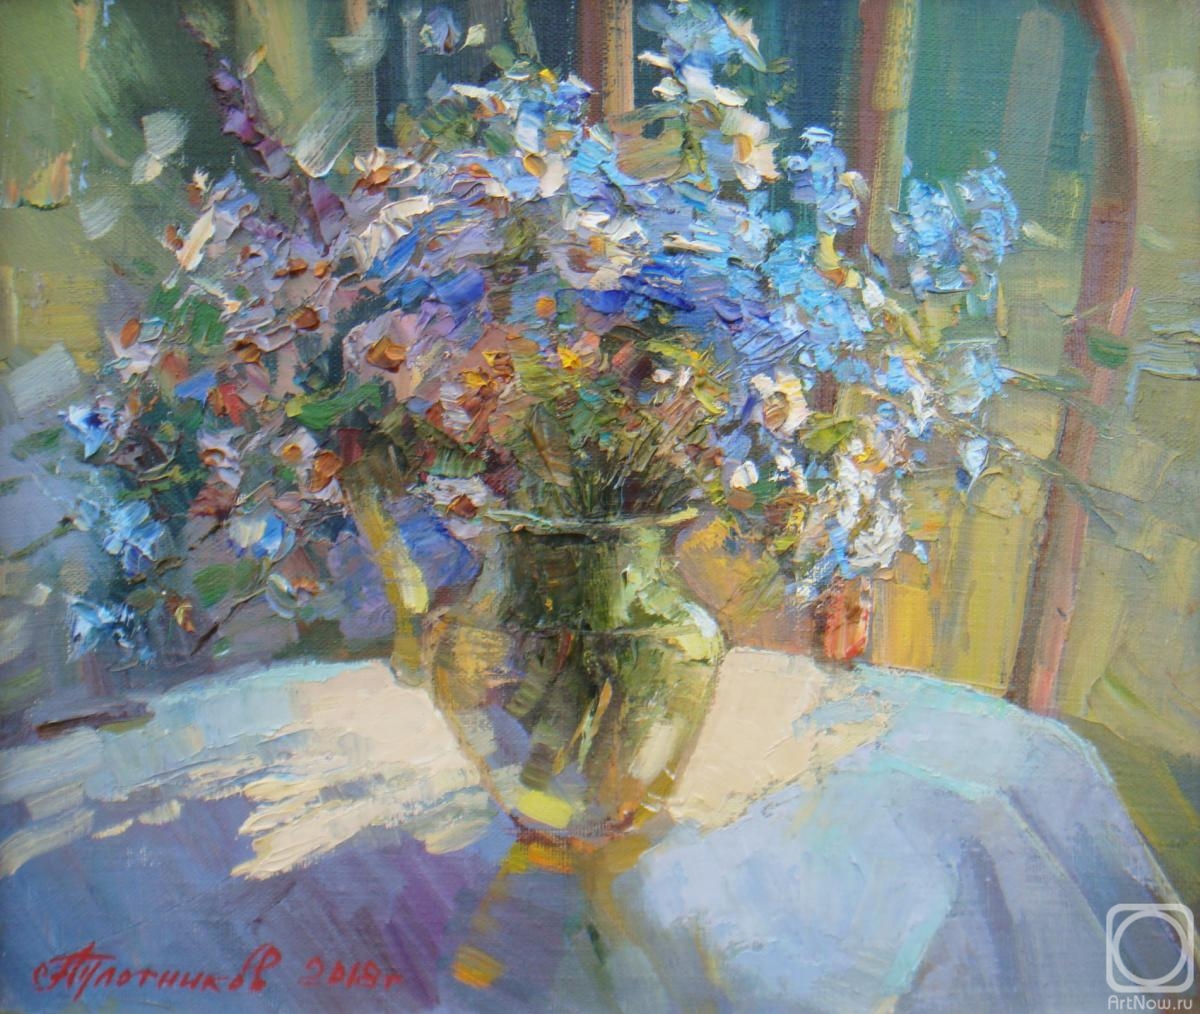 Plotnikov Alexander. Bouquet of wildflowers